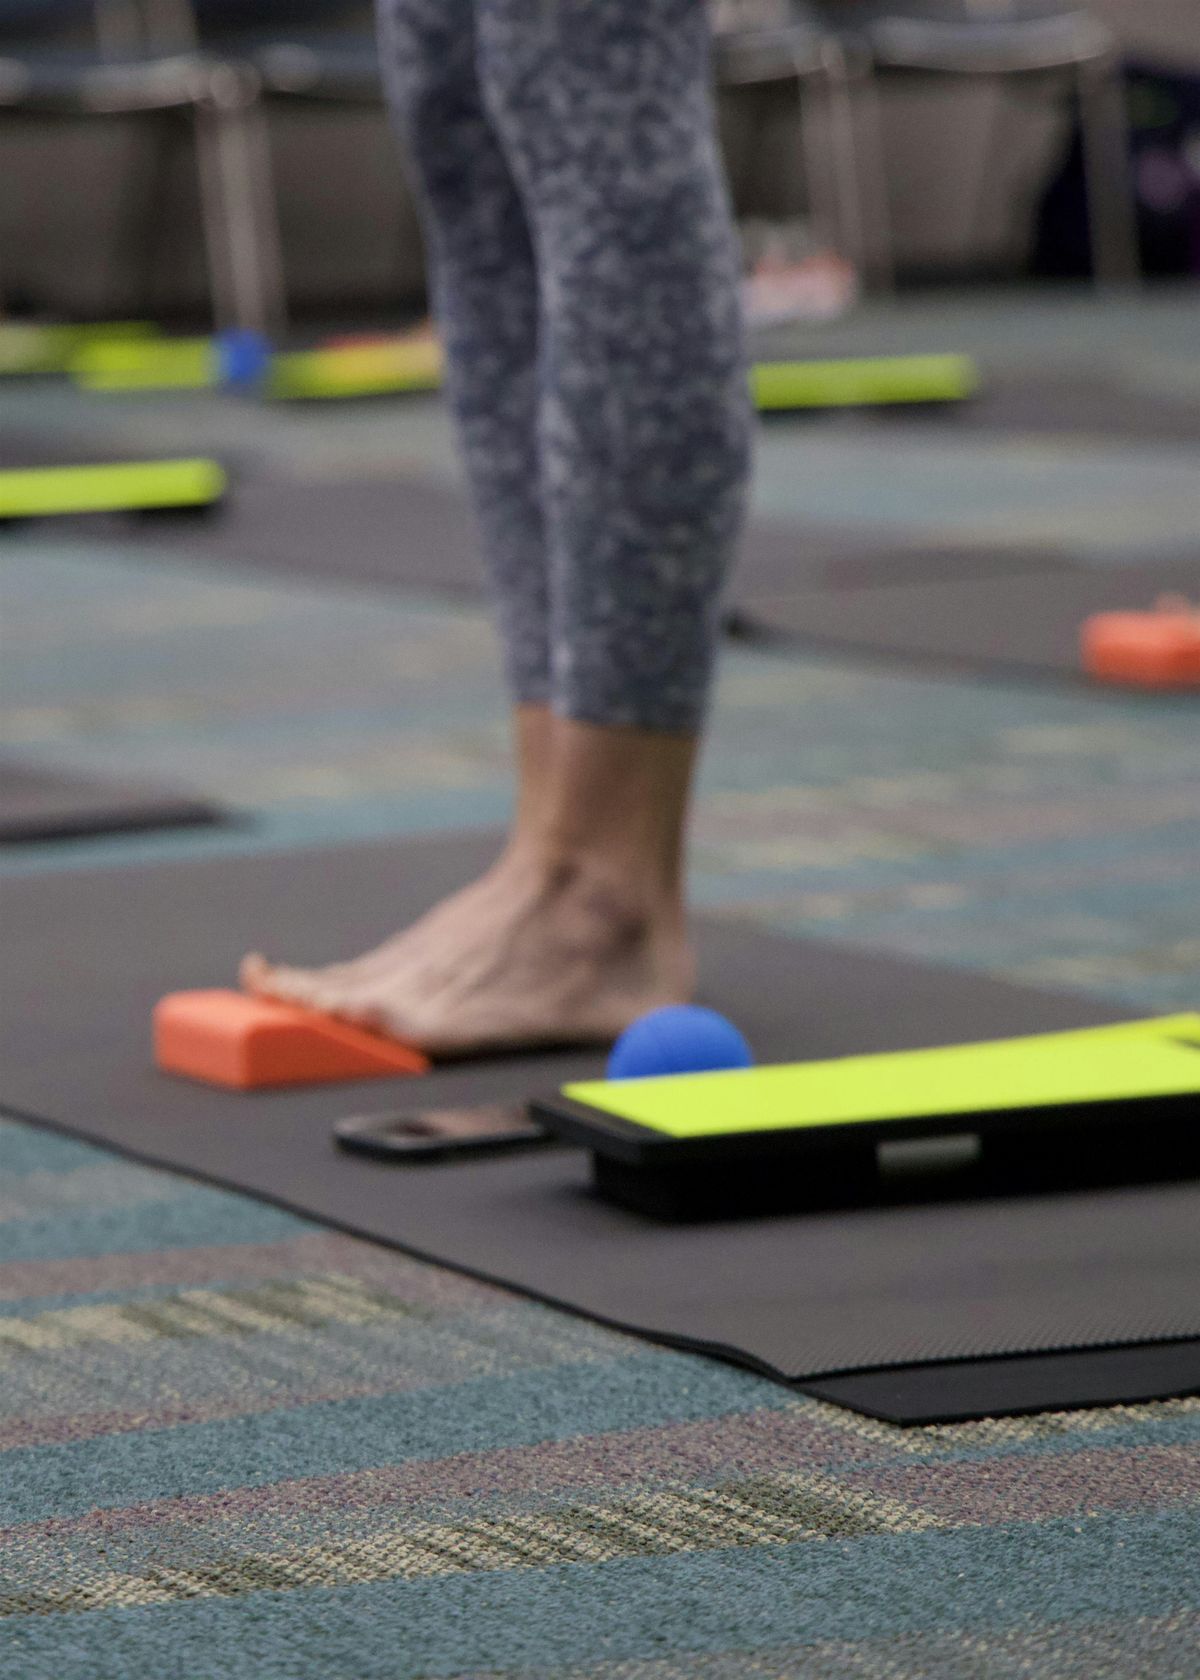 Bulletproof Your Feet & Brain-Based Balance Training Mini-Series